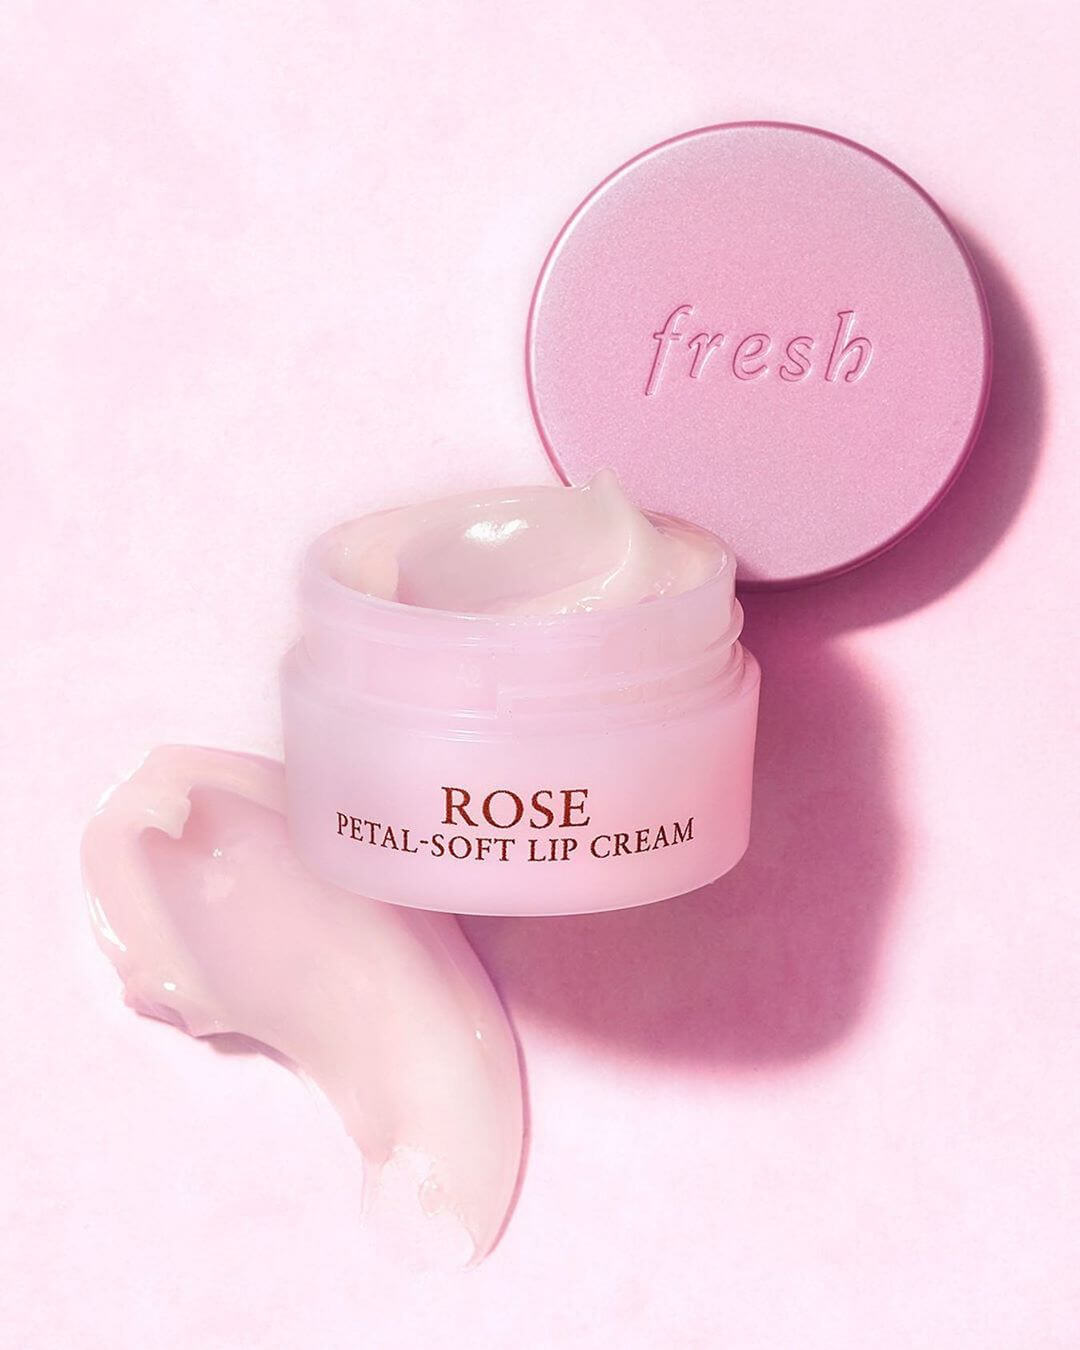 Fresh Rose Petal-Soft Lip Cream 10 g  ลิปเนื้อครีมมี่เนียนนุ่มเพิ่มคามชุ่มชื้นได้ล้ำลึก ยาวนานสูงสุด 24 ชั่วโมง มาพร้อมส่วนผสมจาก rose flower oil ที่ช่วยให้เรียกปากนุ่มเนียนลดความแห้งกร้านและบำรุงริมฝีปากอย่างล้ำลึก เพื่อริมฝีปากอ่อนนุ่มชุ่มชื้นดุจกลีบกุหลาบ